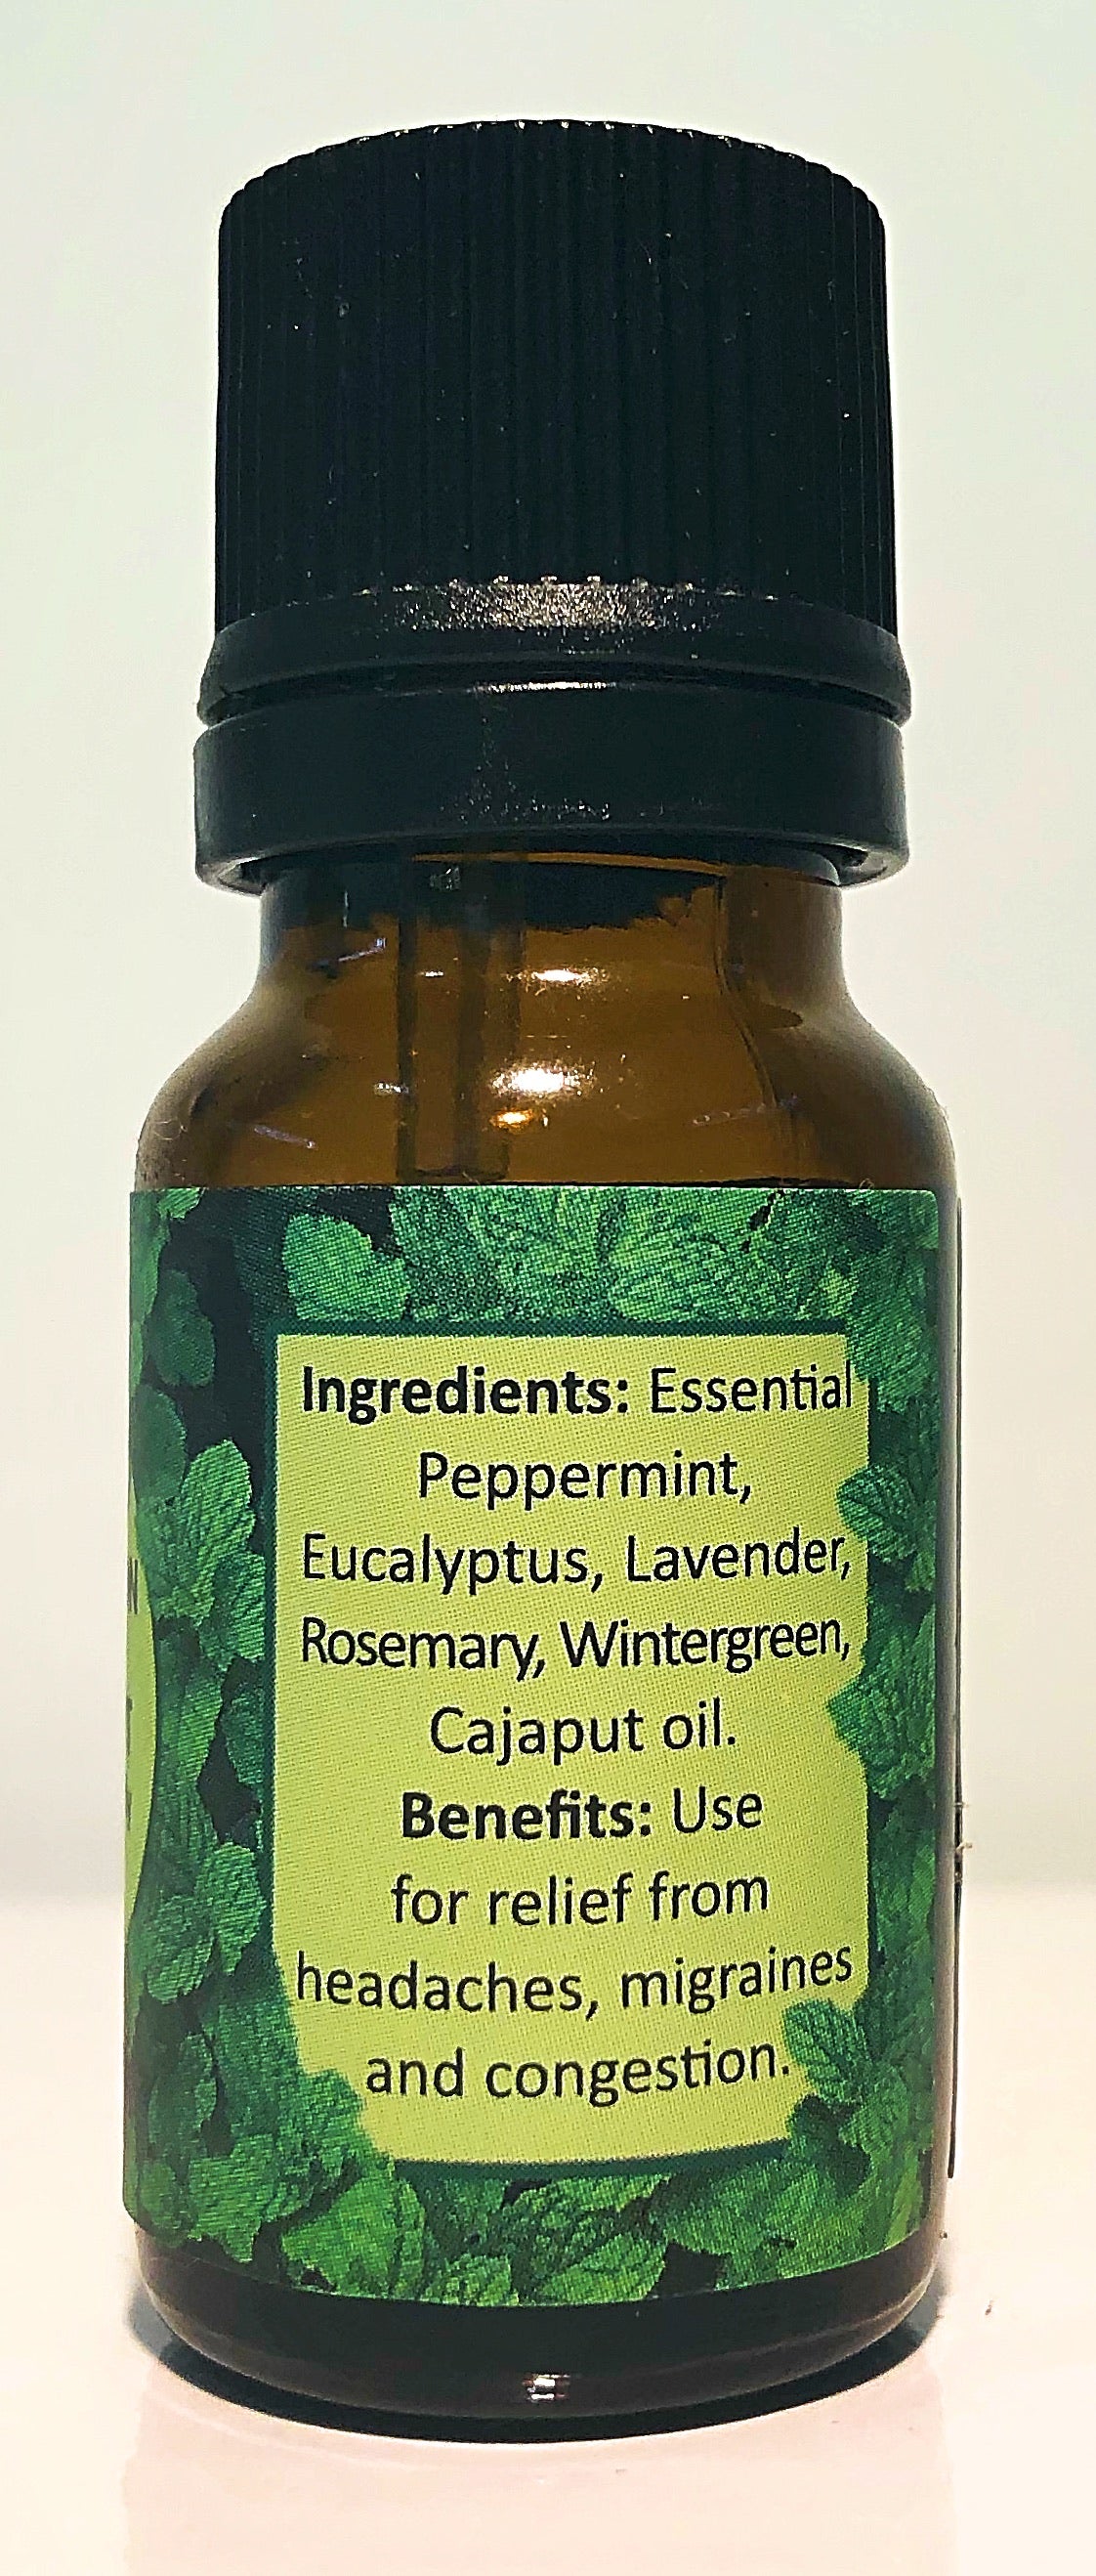 Peppermint Rescue ®-Headache Remedy- Pure Essential oil Blend 10ml-Relaxation Island®